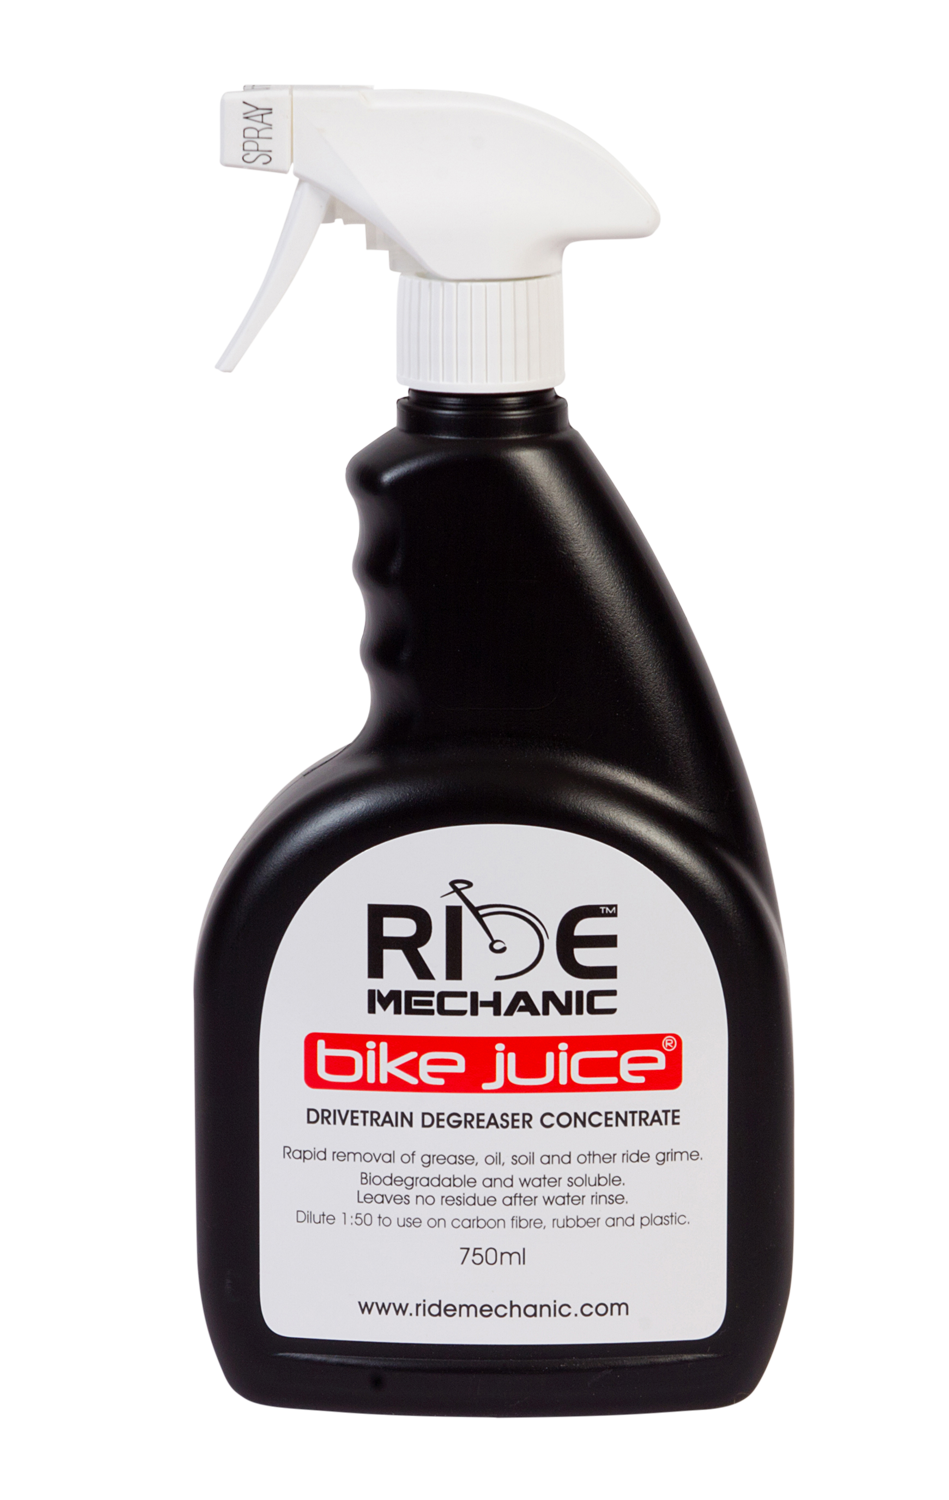 Ride Mechanic Bike Juice